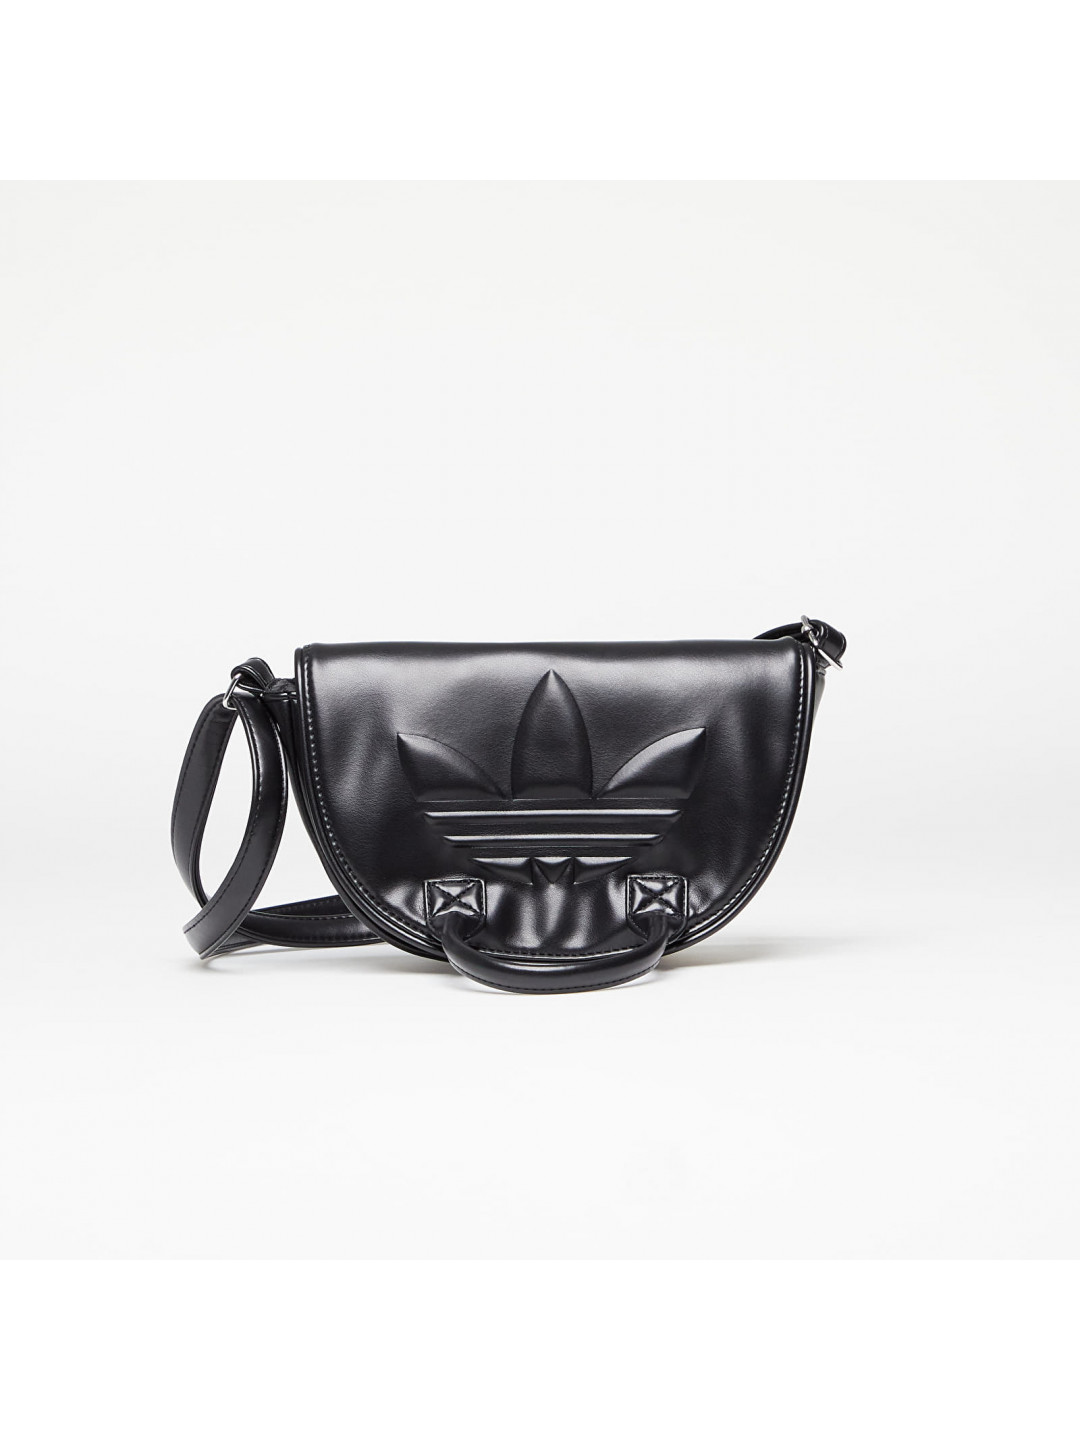 Adidas Satchel Bag Black